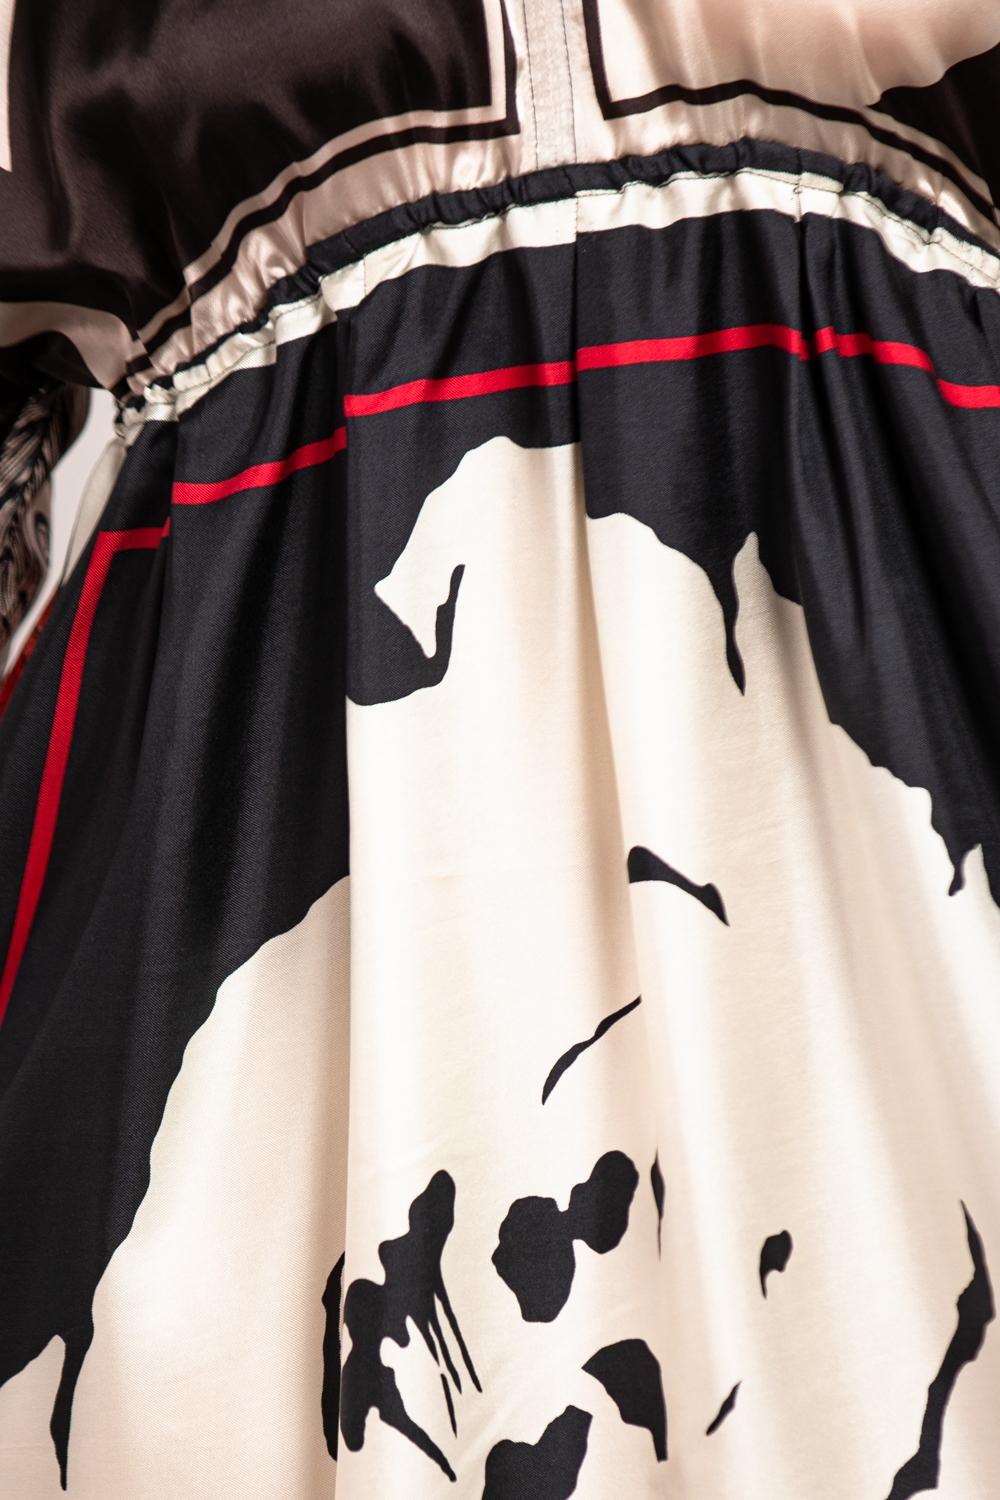 MORPHEW COLLECTION Black & White Geometric Silk Virgo Empire Waist Dress Made F For Sale 5